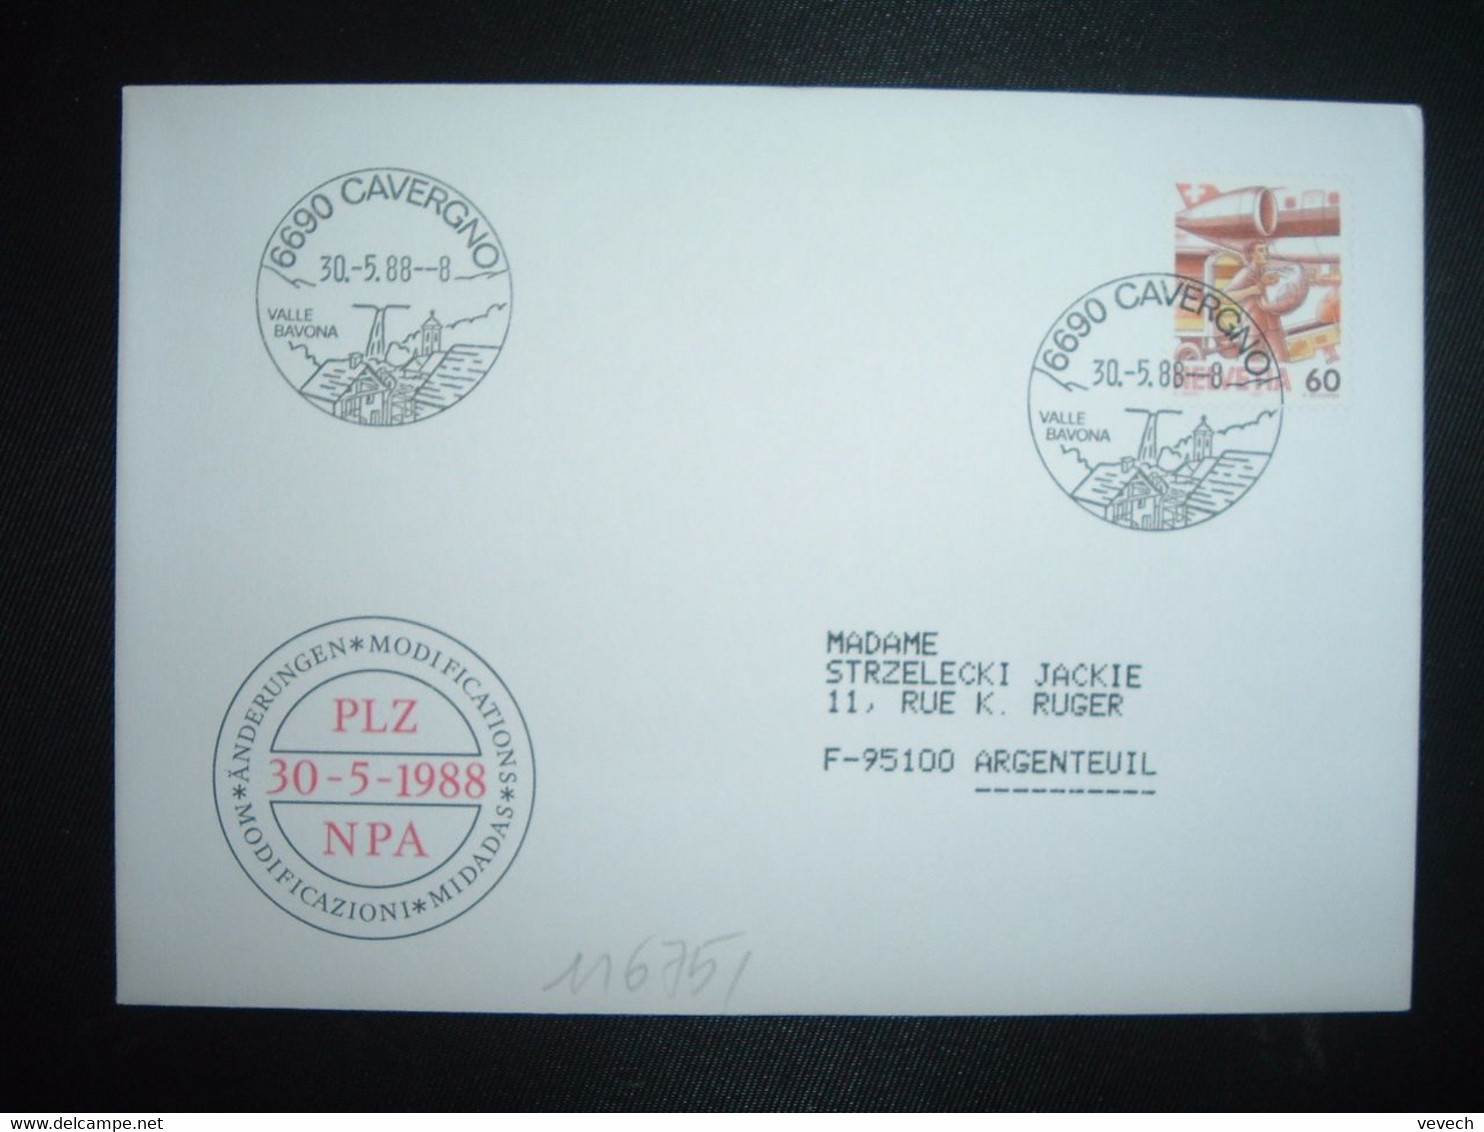 LETTRE TP POSTE AVION 60 OBL.30 5 88 6690 CAVERGNO VALLE VAVONA - Postmark Collection